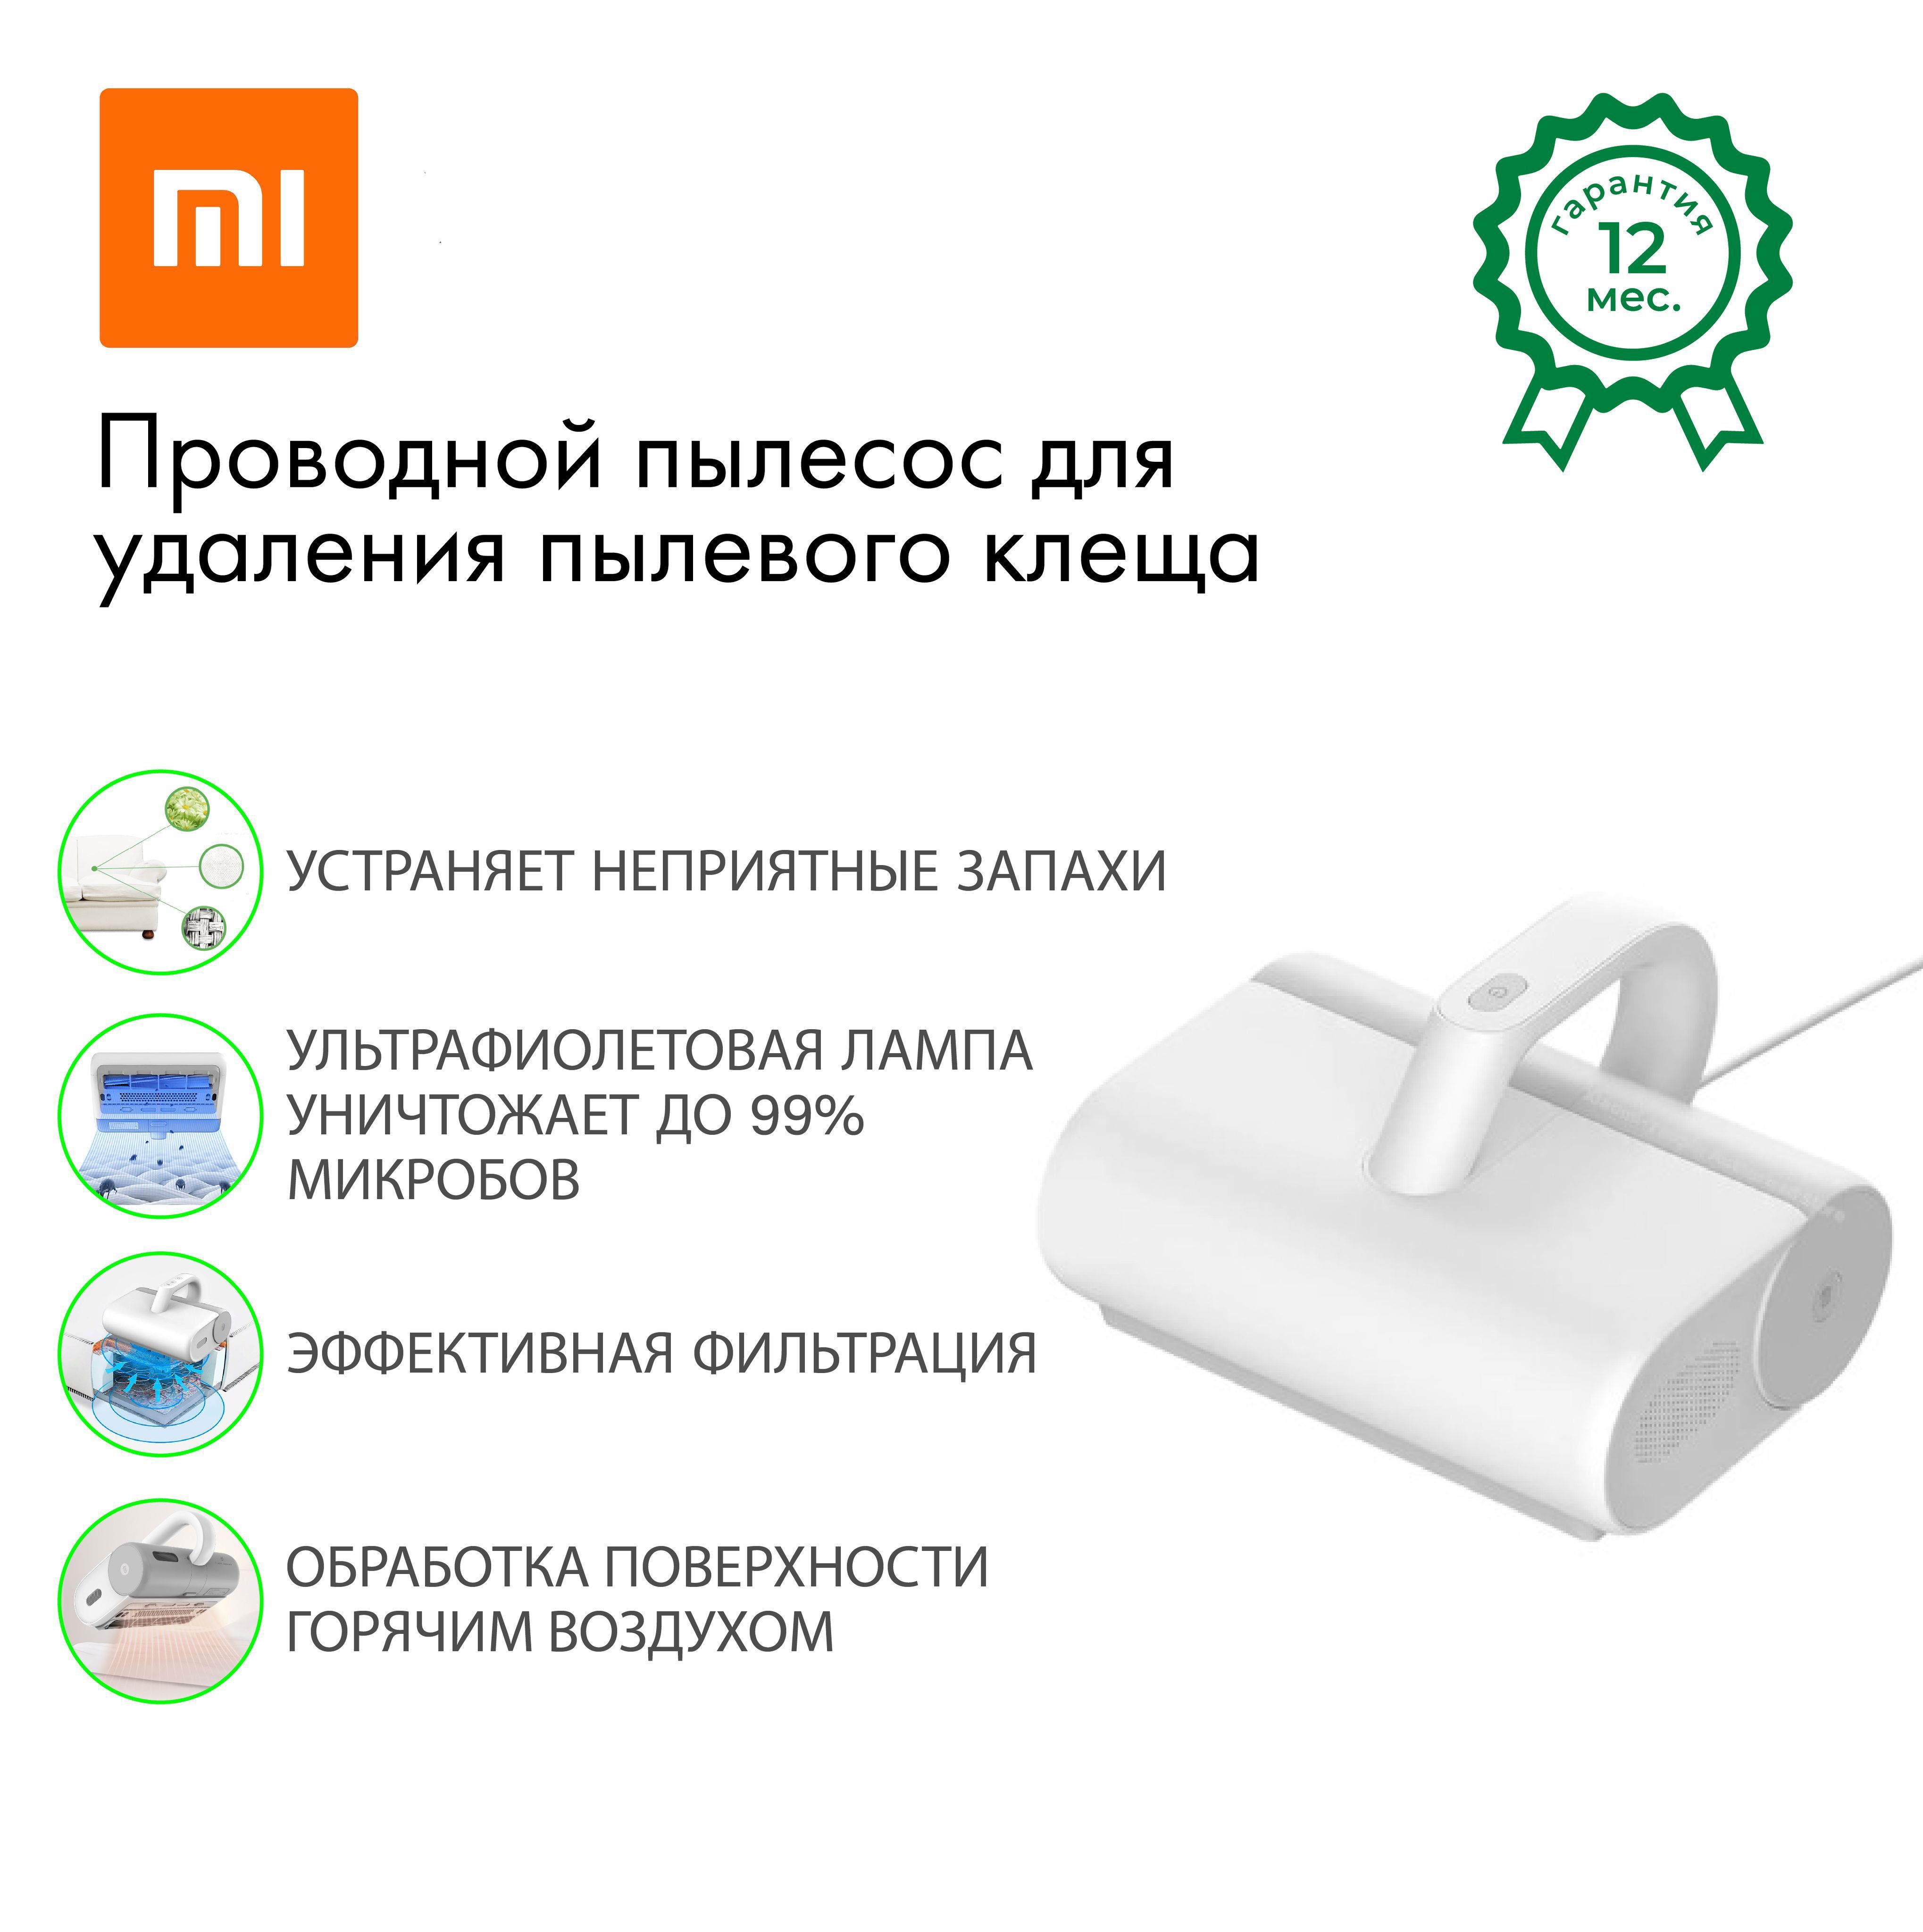 Xiaomi mijia dust mite vacuum cleaner. Пылесос Xiaomi (mjcmy01dy). Xiaomi Dust Mite Vacuum. Xiaomi Dust Mite Vacuum вилка. Пылесос для удаления пылевого клеща.